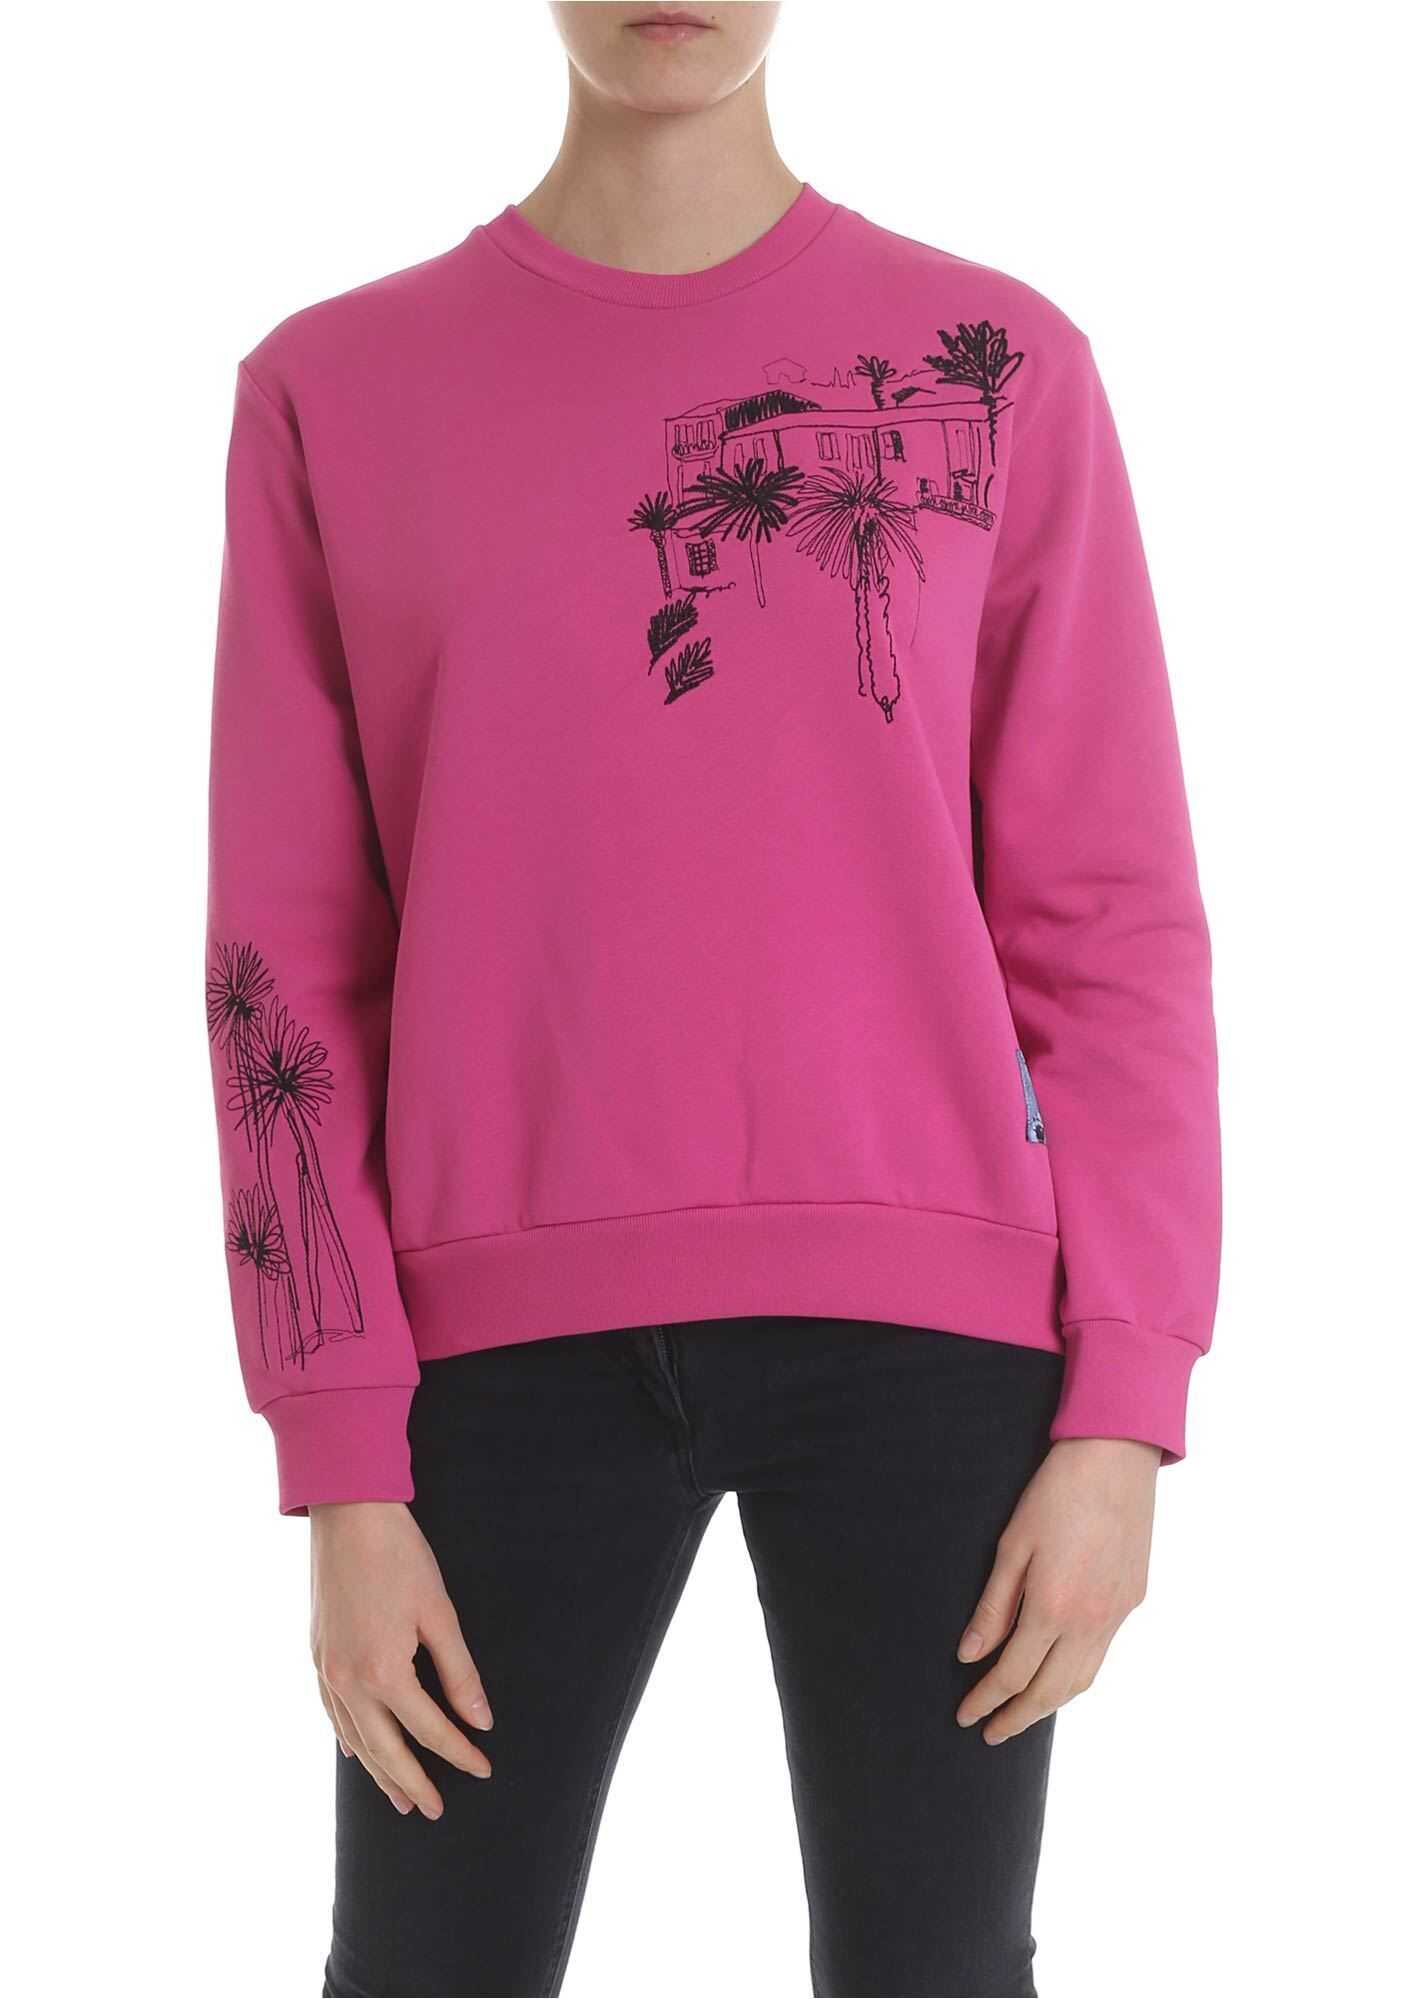 Paul Smith Sweatshirt In Fuchsia With Contrasting Embroidery Fuchsia